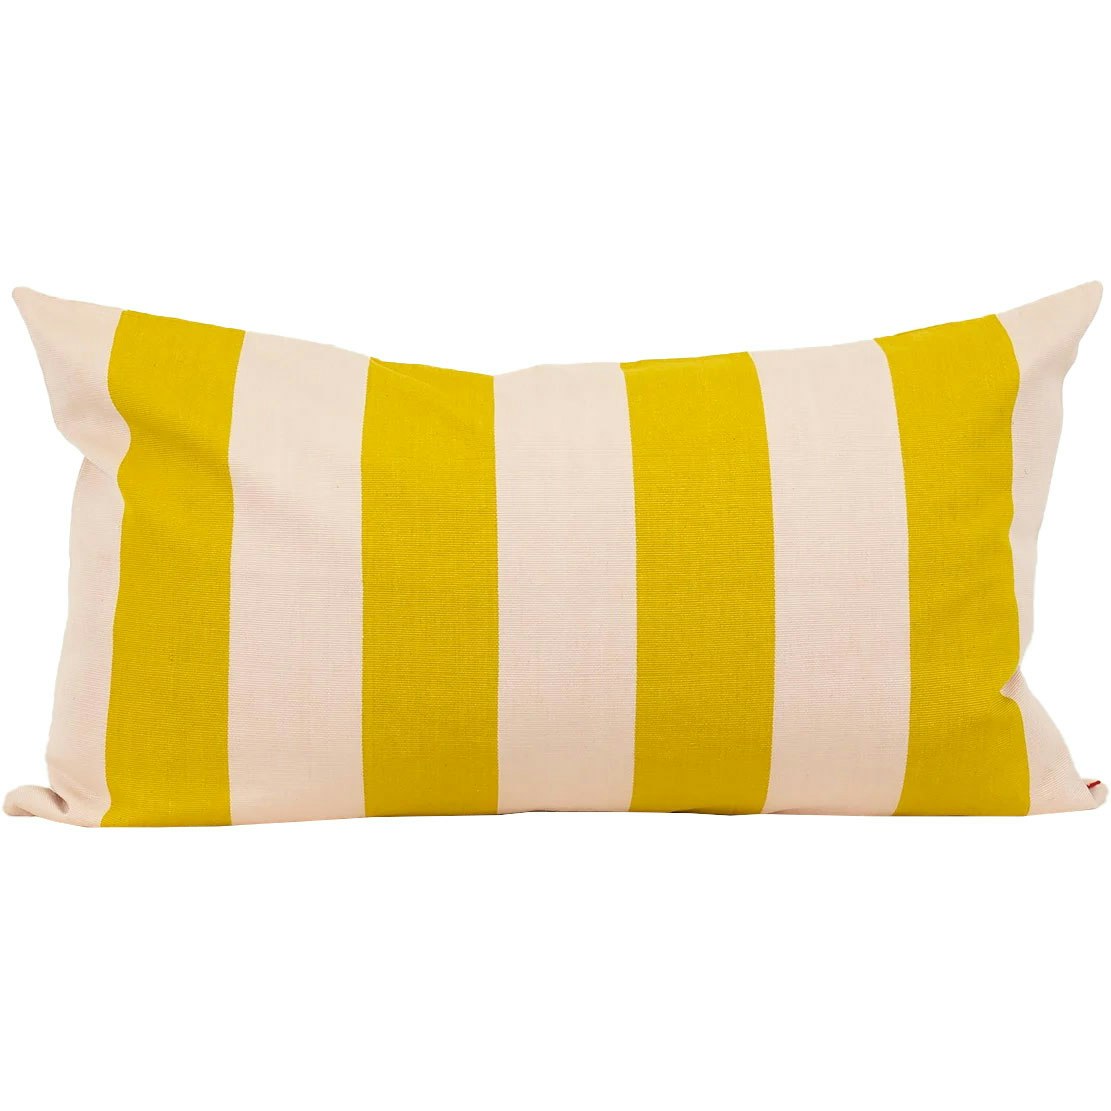 Fifi Cushion Cover 50x90 cm, Mustard/Light Pink